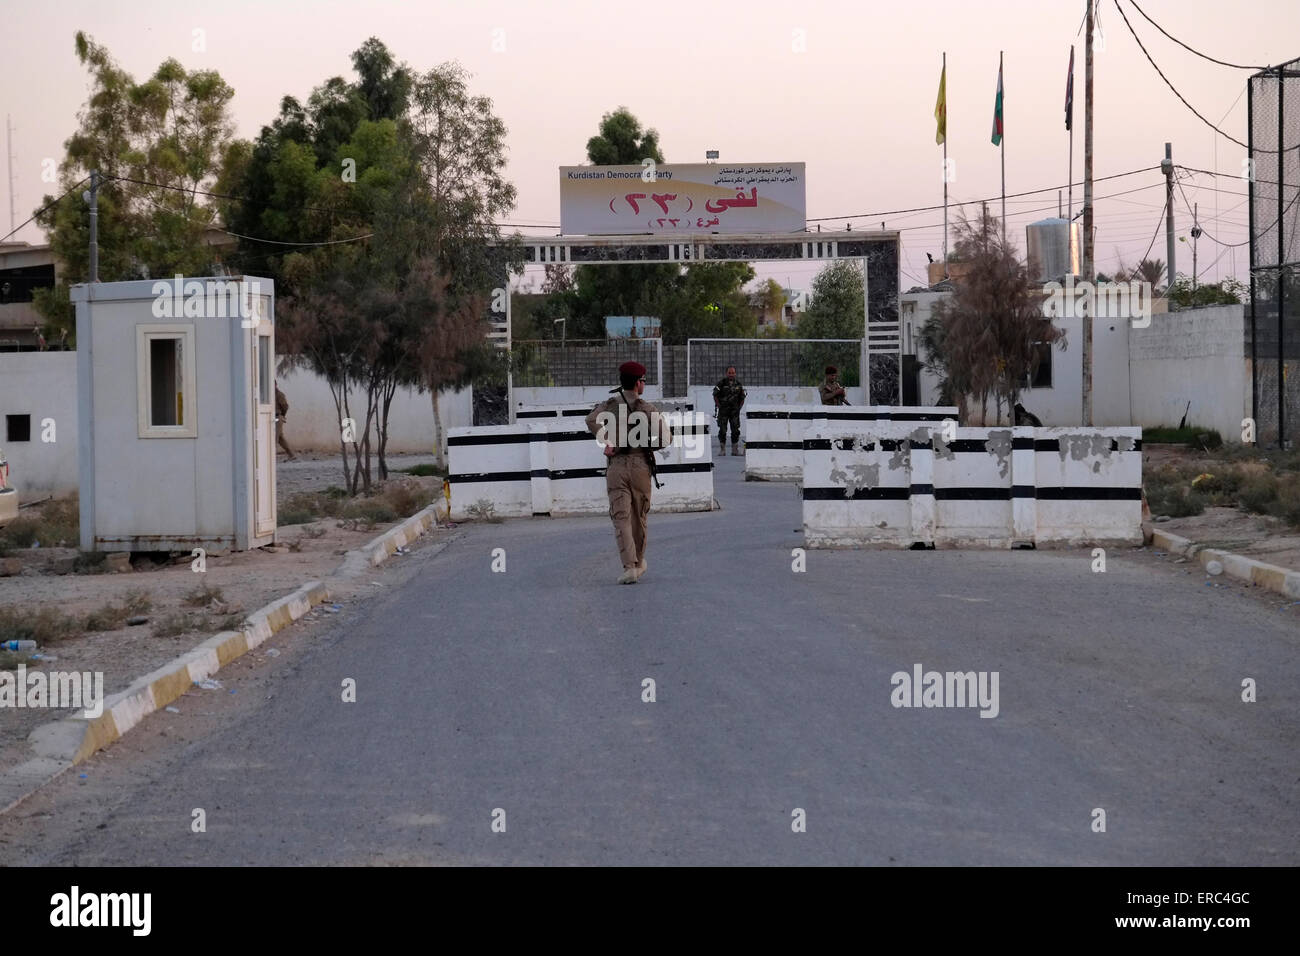 Entrance to a Kurdish Peshmerga military base in the city of Makhmur